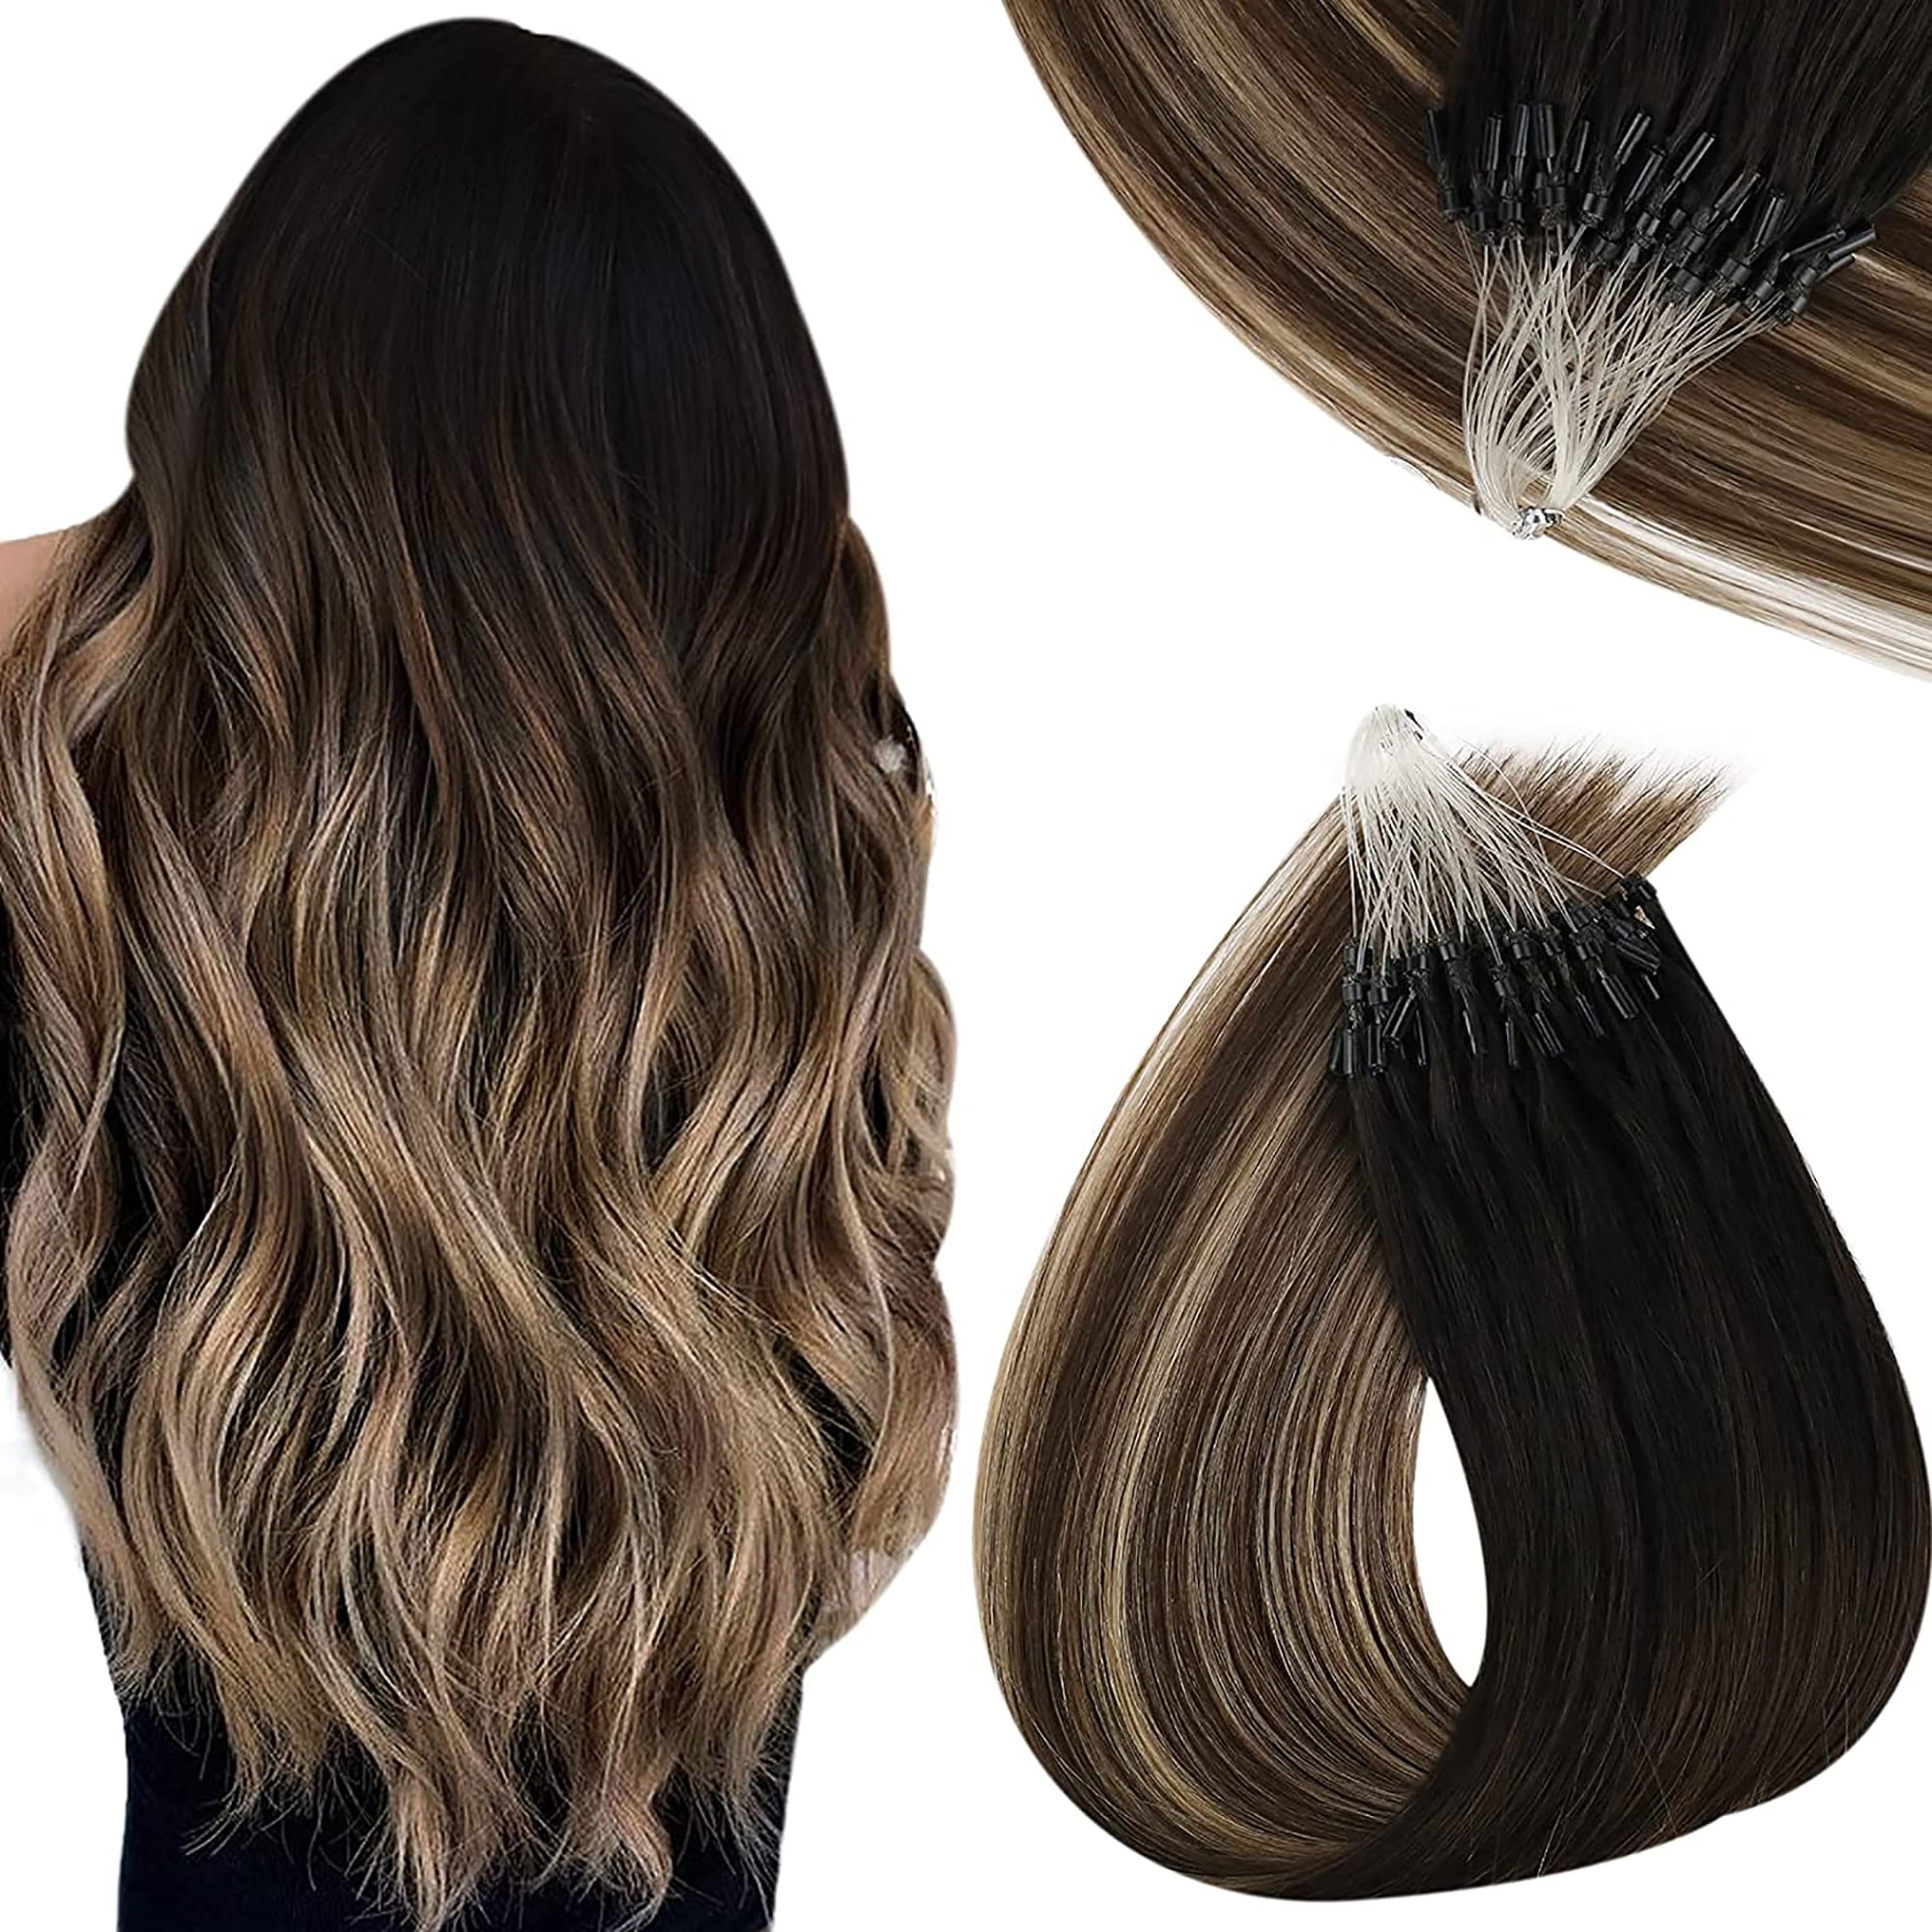 Sunny Micro Loop Hair Extensions Black to Dark Brown Mixed Ash Blonde  Balayage Human Hair 22 inch 50g - Walmart.com